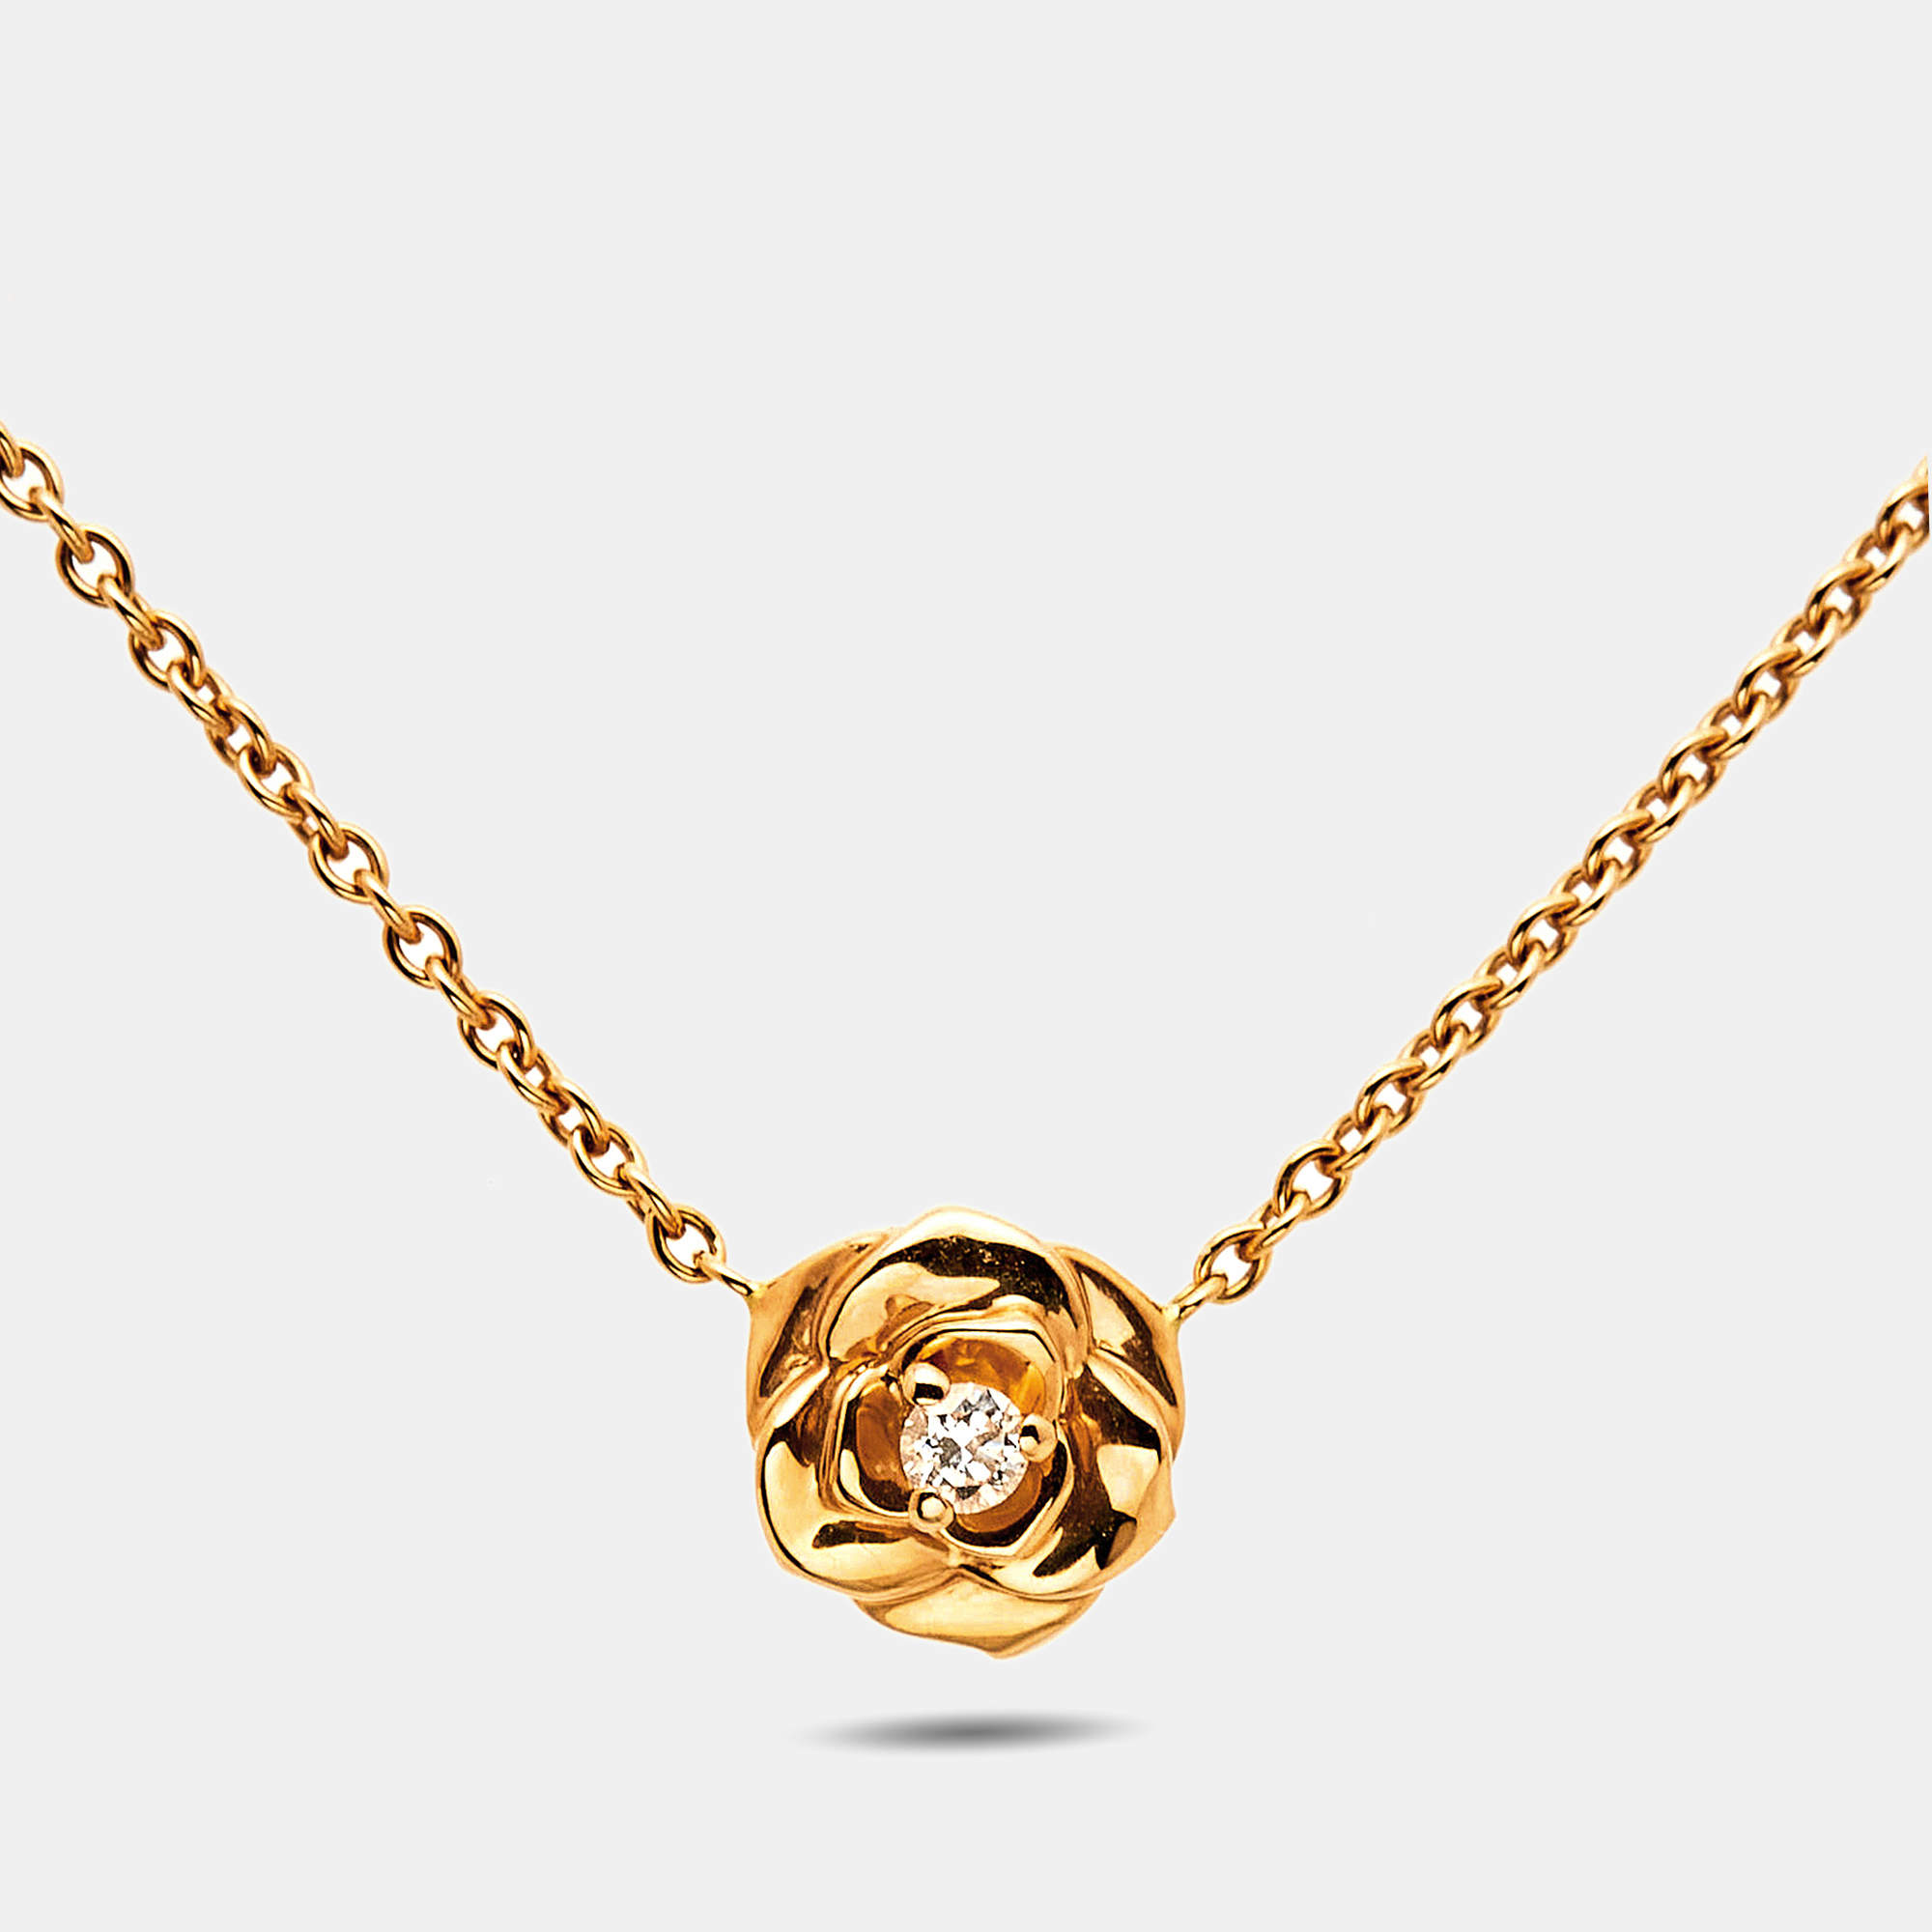 White gold Diamond Necklace G37U9500 - Piaget Luxury Jewelry Online